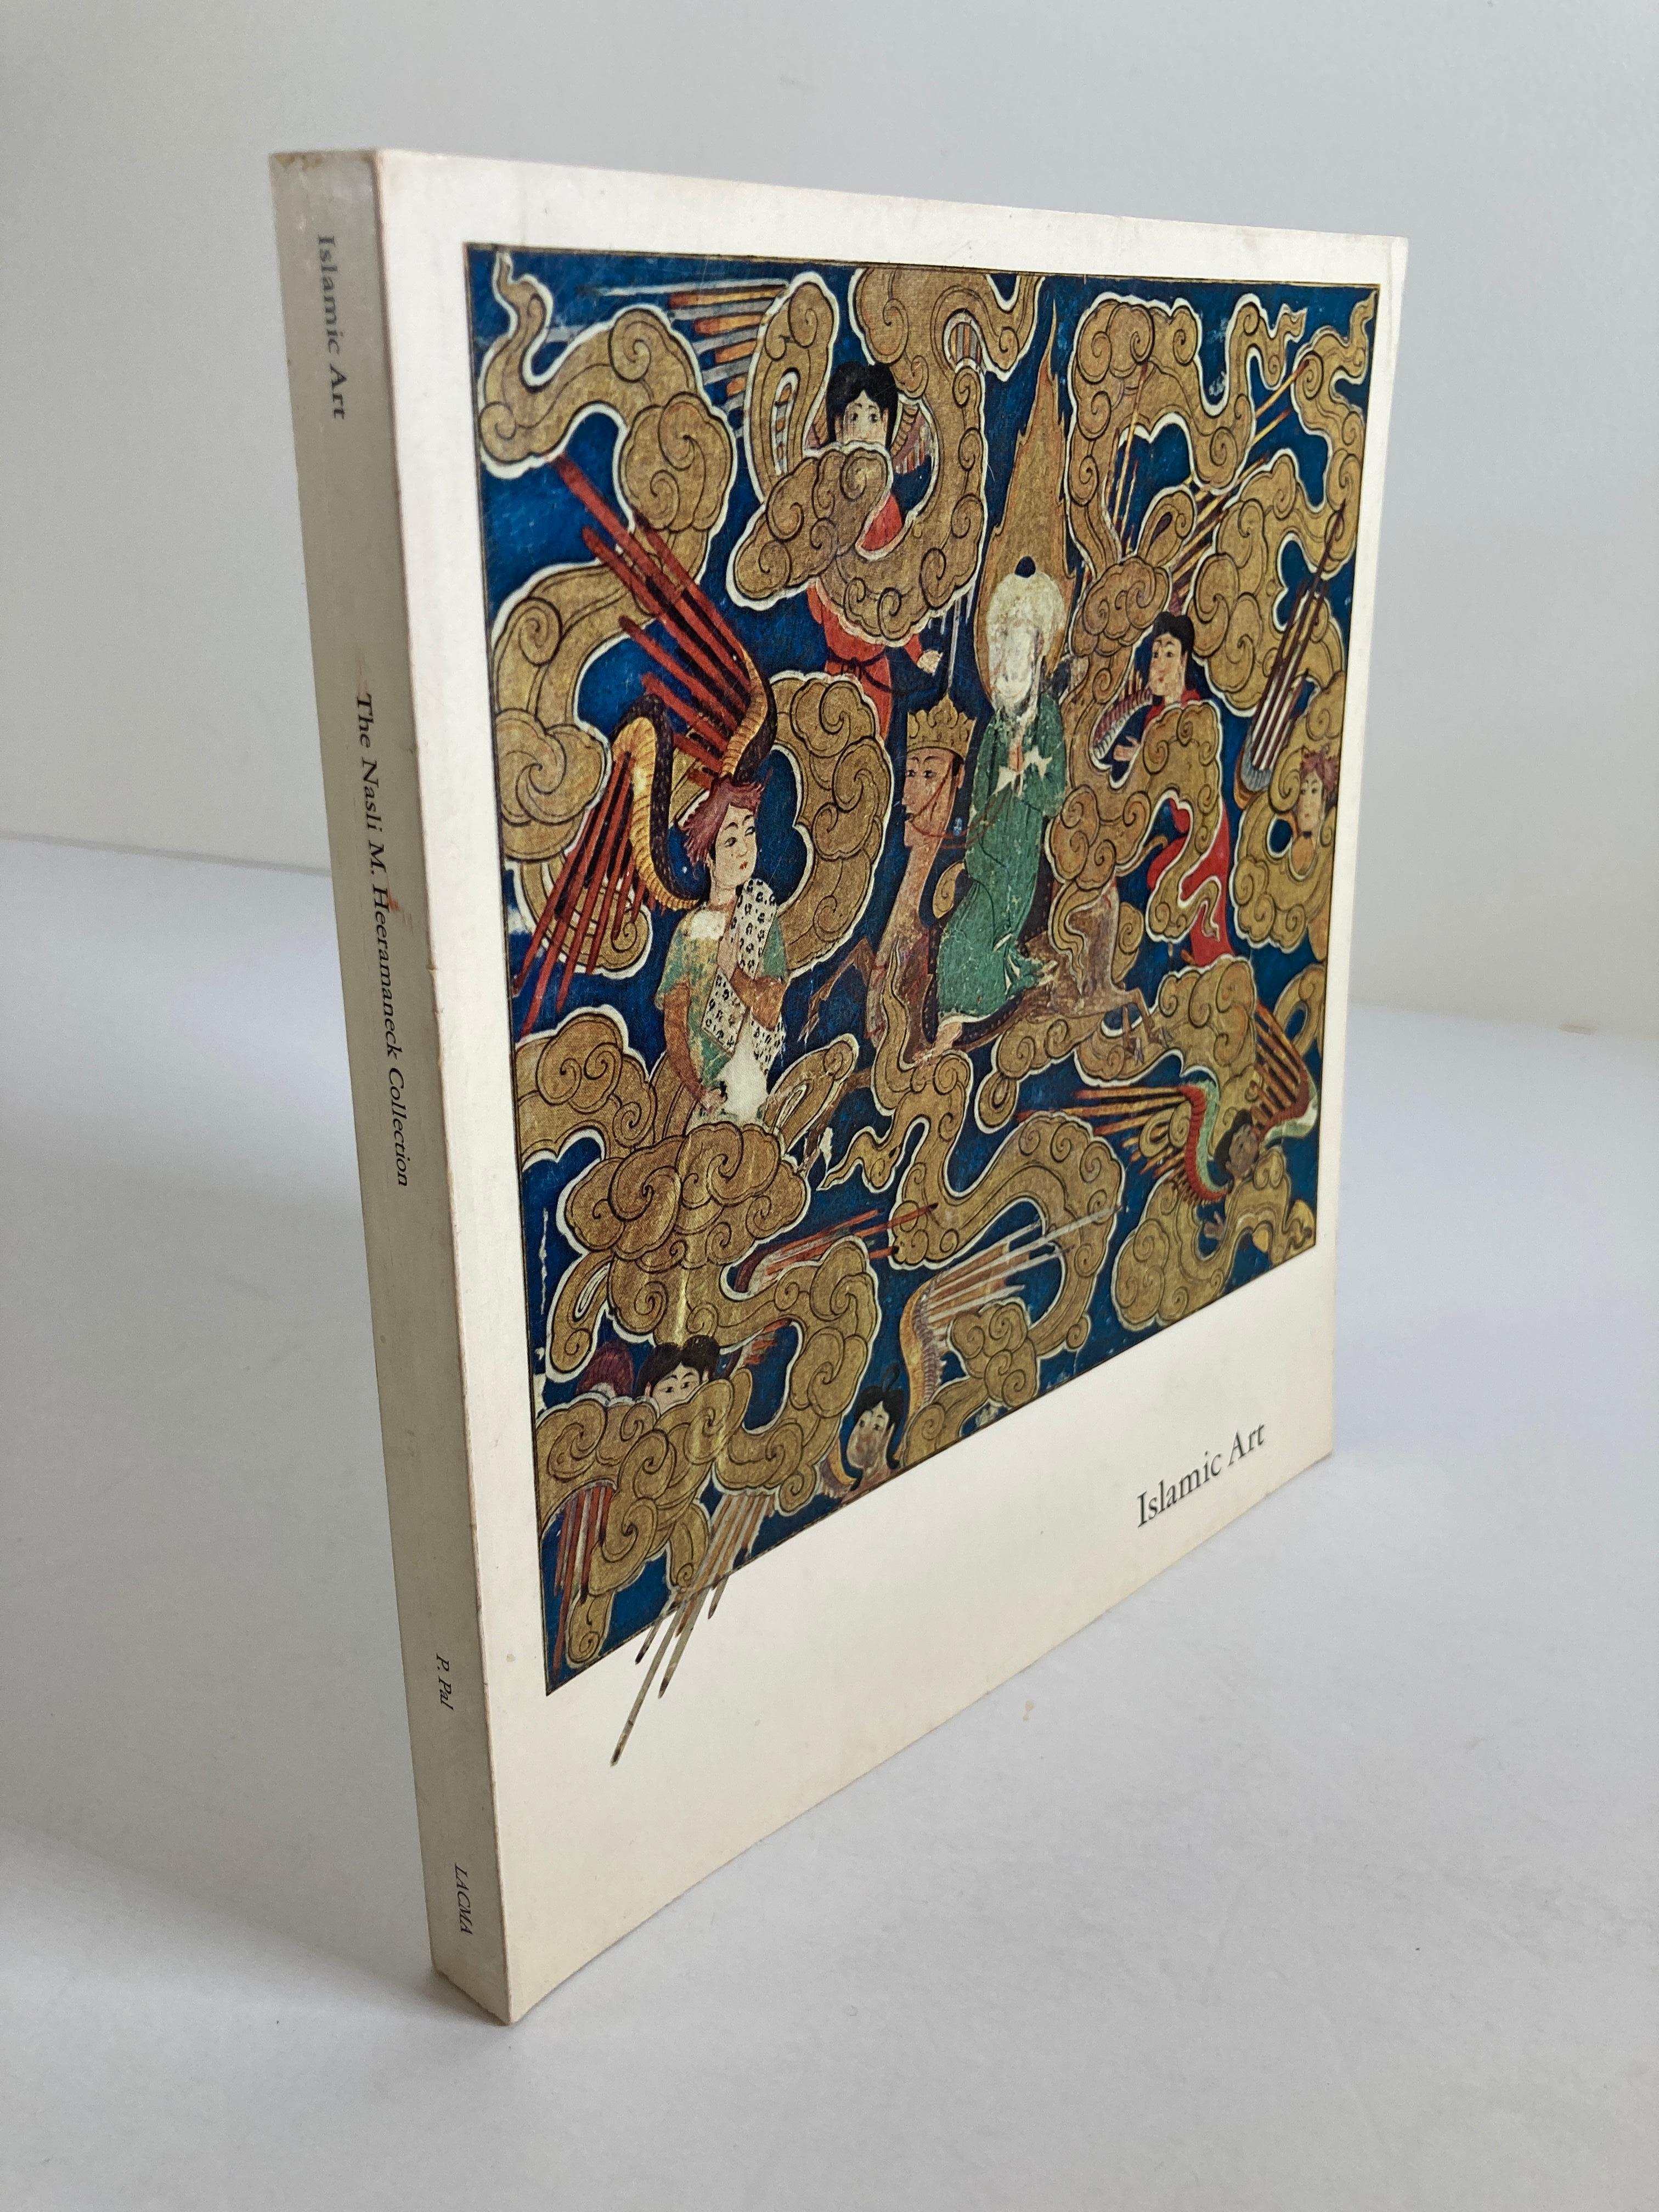 Islamic Art, The Nasli M. Heeramaneck Collection January 1, 1973 Paperback Book
Gift of Joan Palevsky/
Pal, Pratapaditya (Edited by)
Title: Islamic Art: The Nasli M. Heeramaneck .
Publisher: Los Angeles County Museum of Art, Los Angeles,